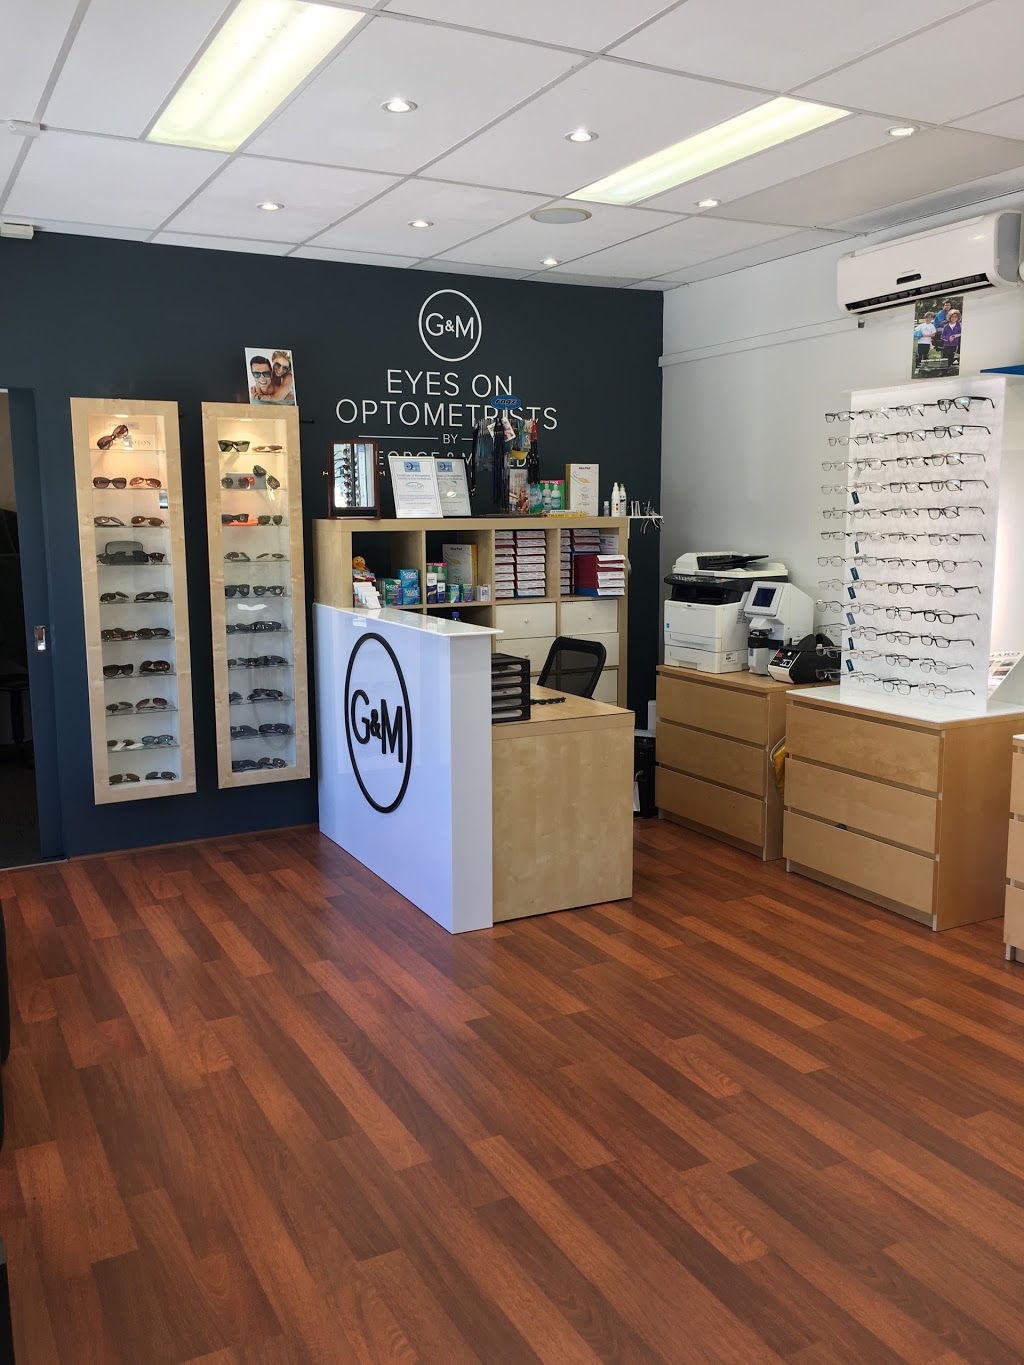 Eyes on Optometrists by G&M Eyecare (19 Marri Rd) Opening Hours